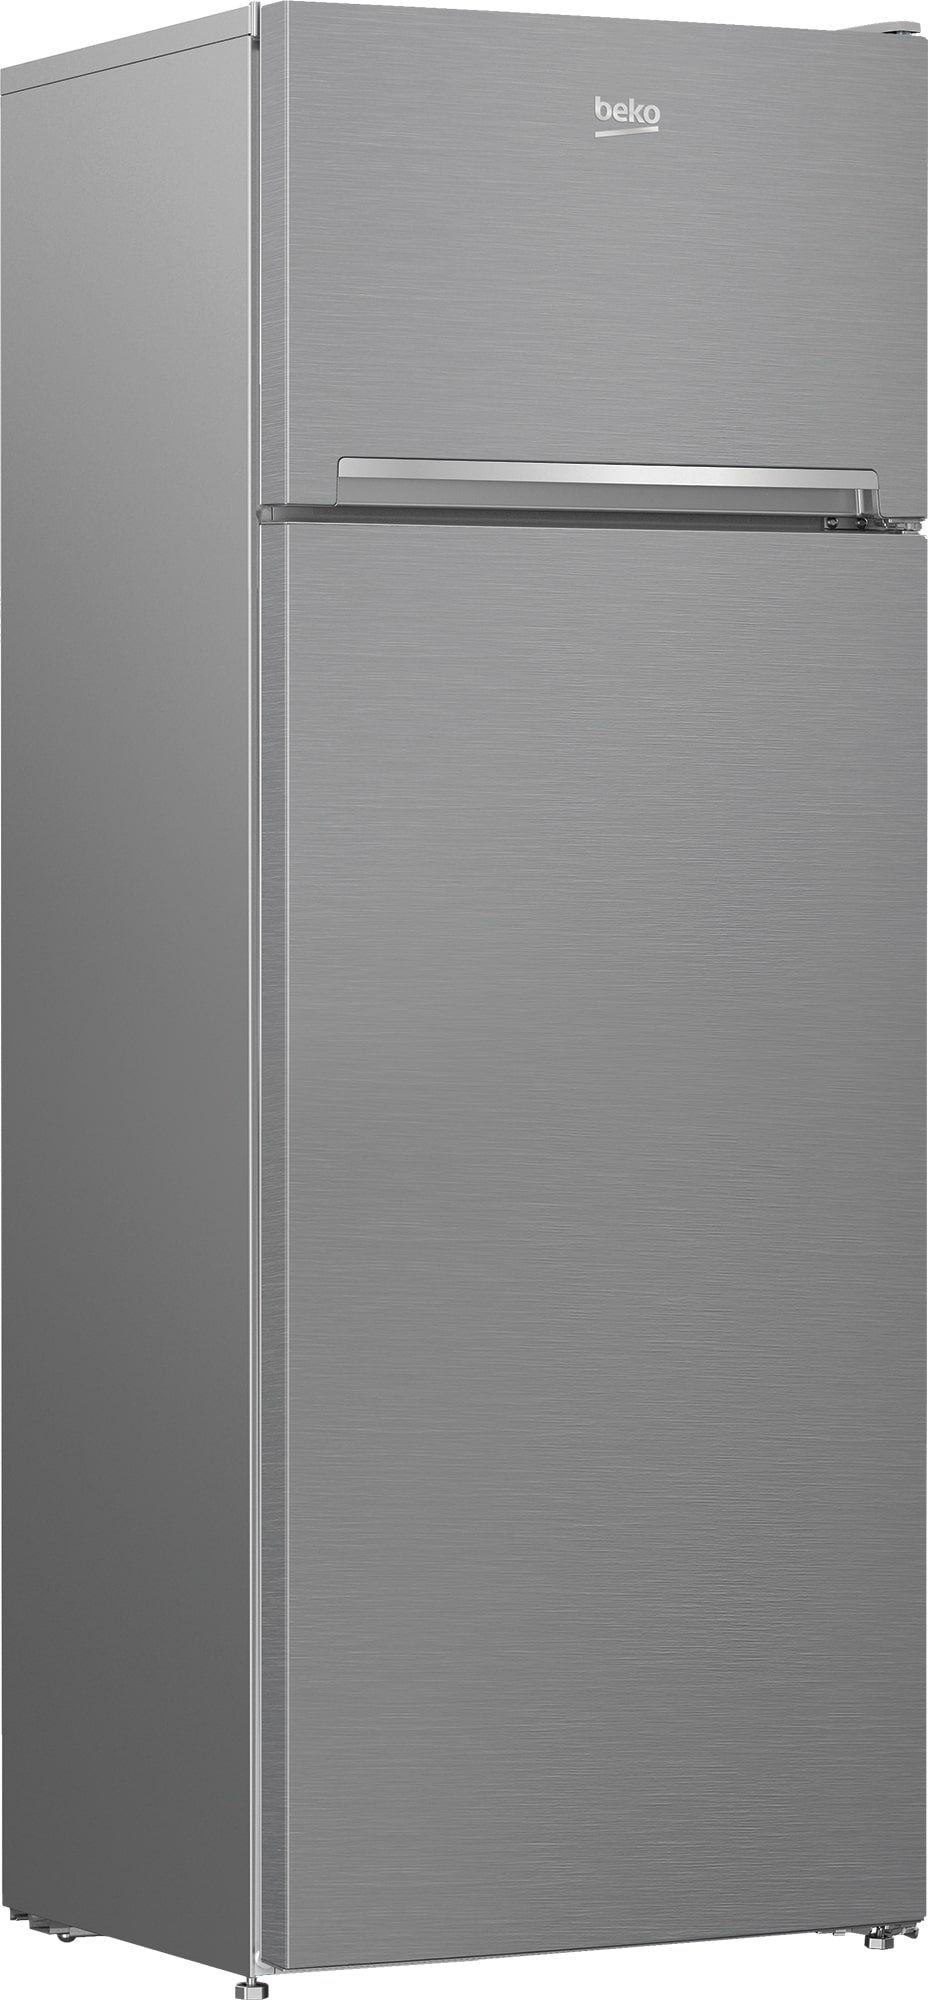 Beko Refrigerator 240 liters- Silver